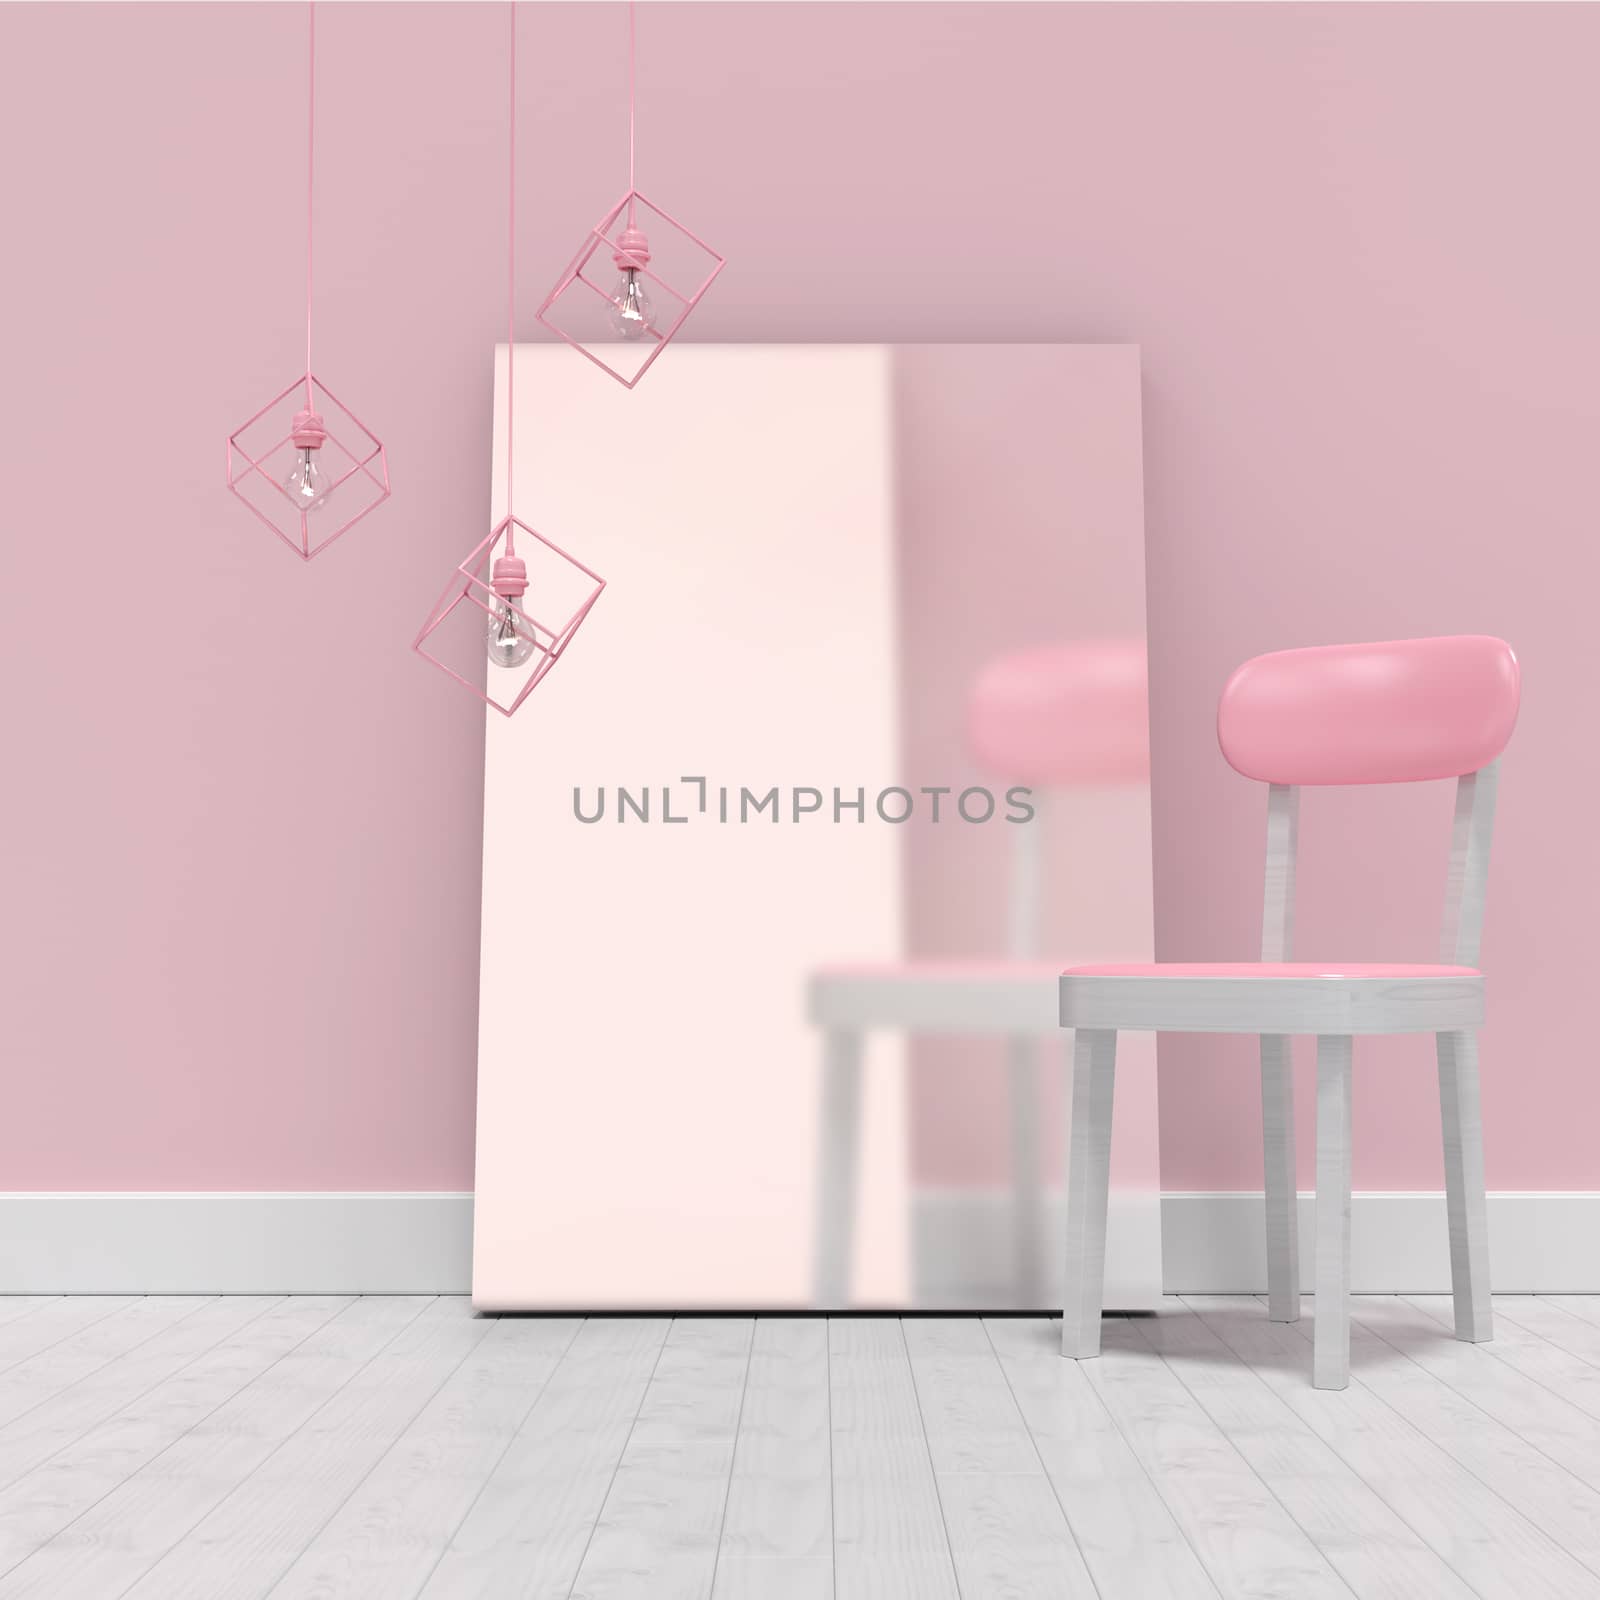 Pink chair by blank whiteboard against wall  by Wavebreakmedia